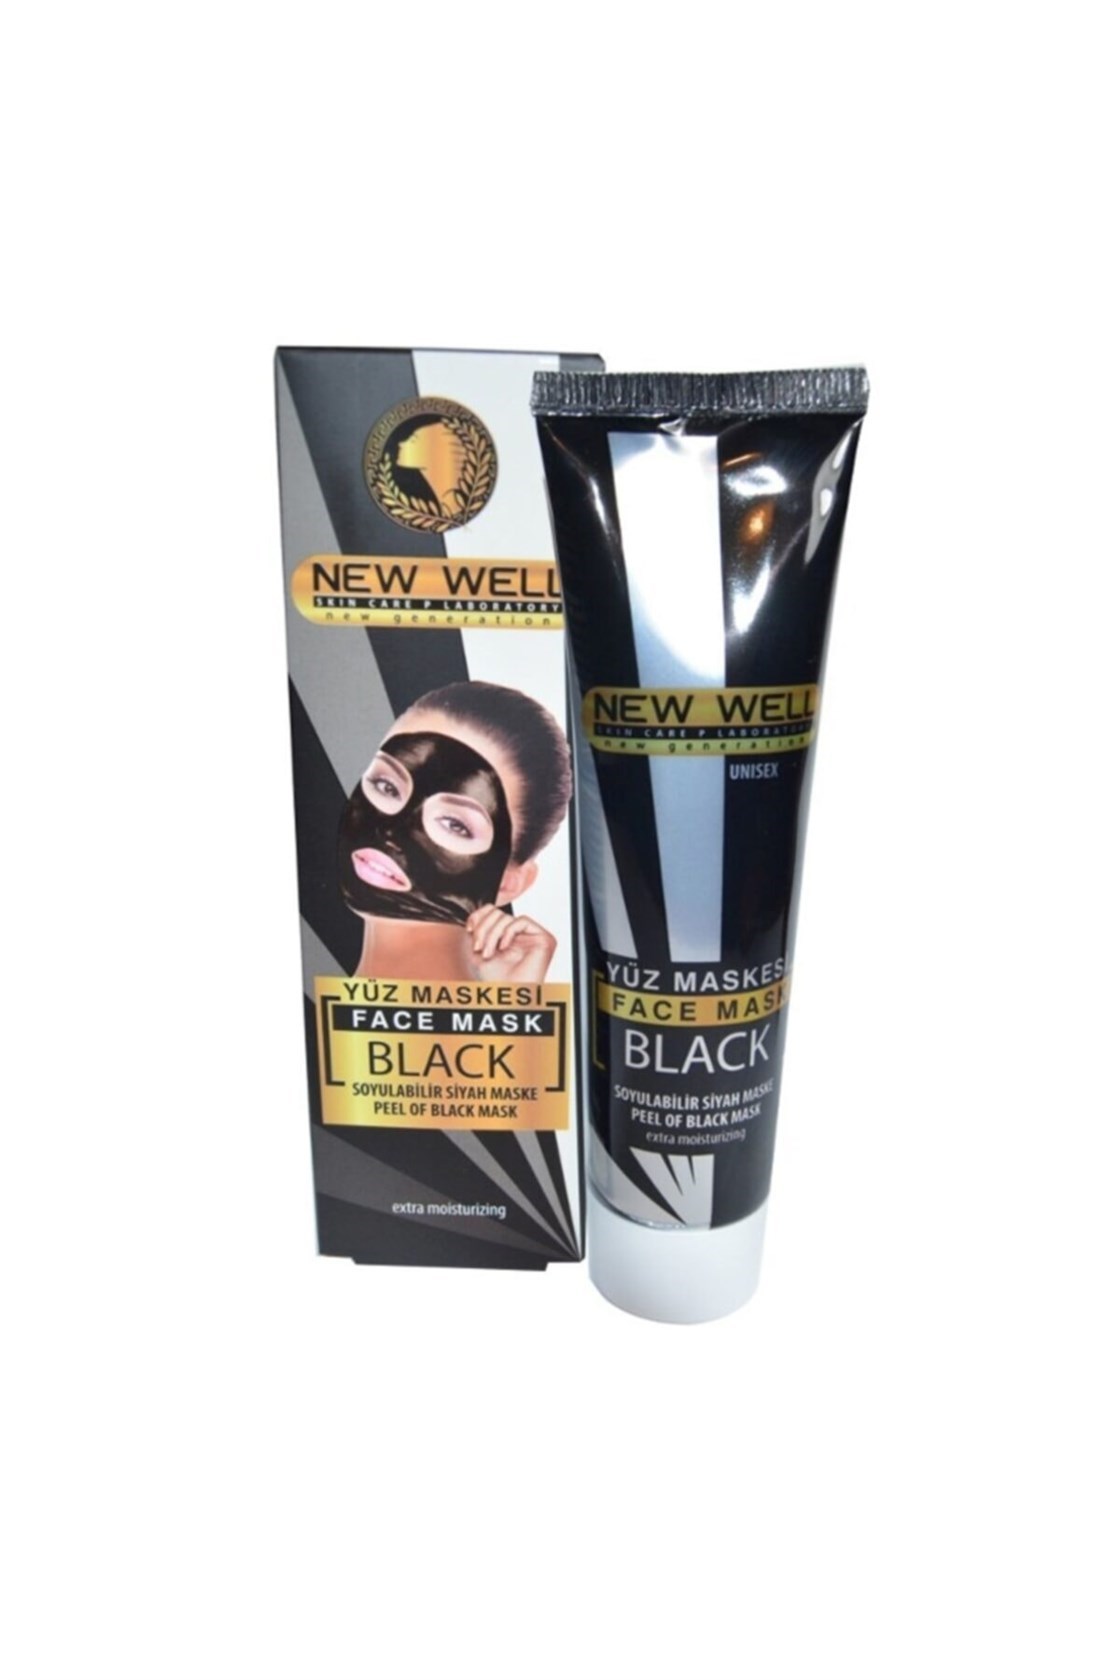 New Well Siyah Maske 100 ml Fiyatları İndirimli | Dermoailem.com